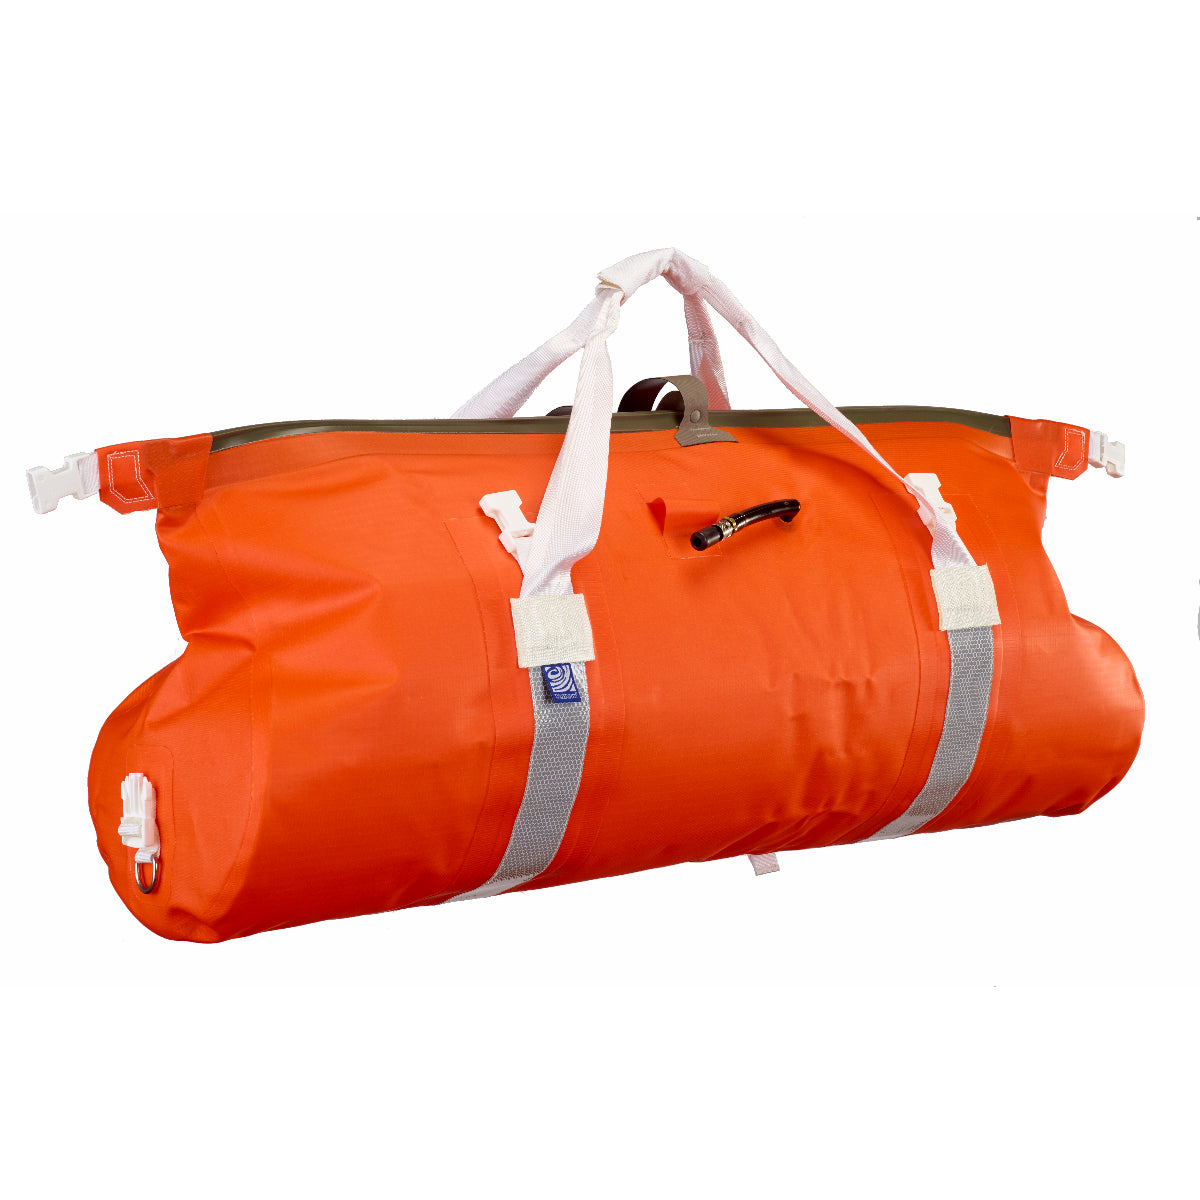 Watershed Survival Equipment Bag, LG, LP Relief Valve